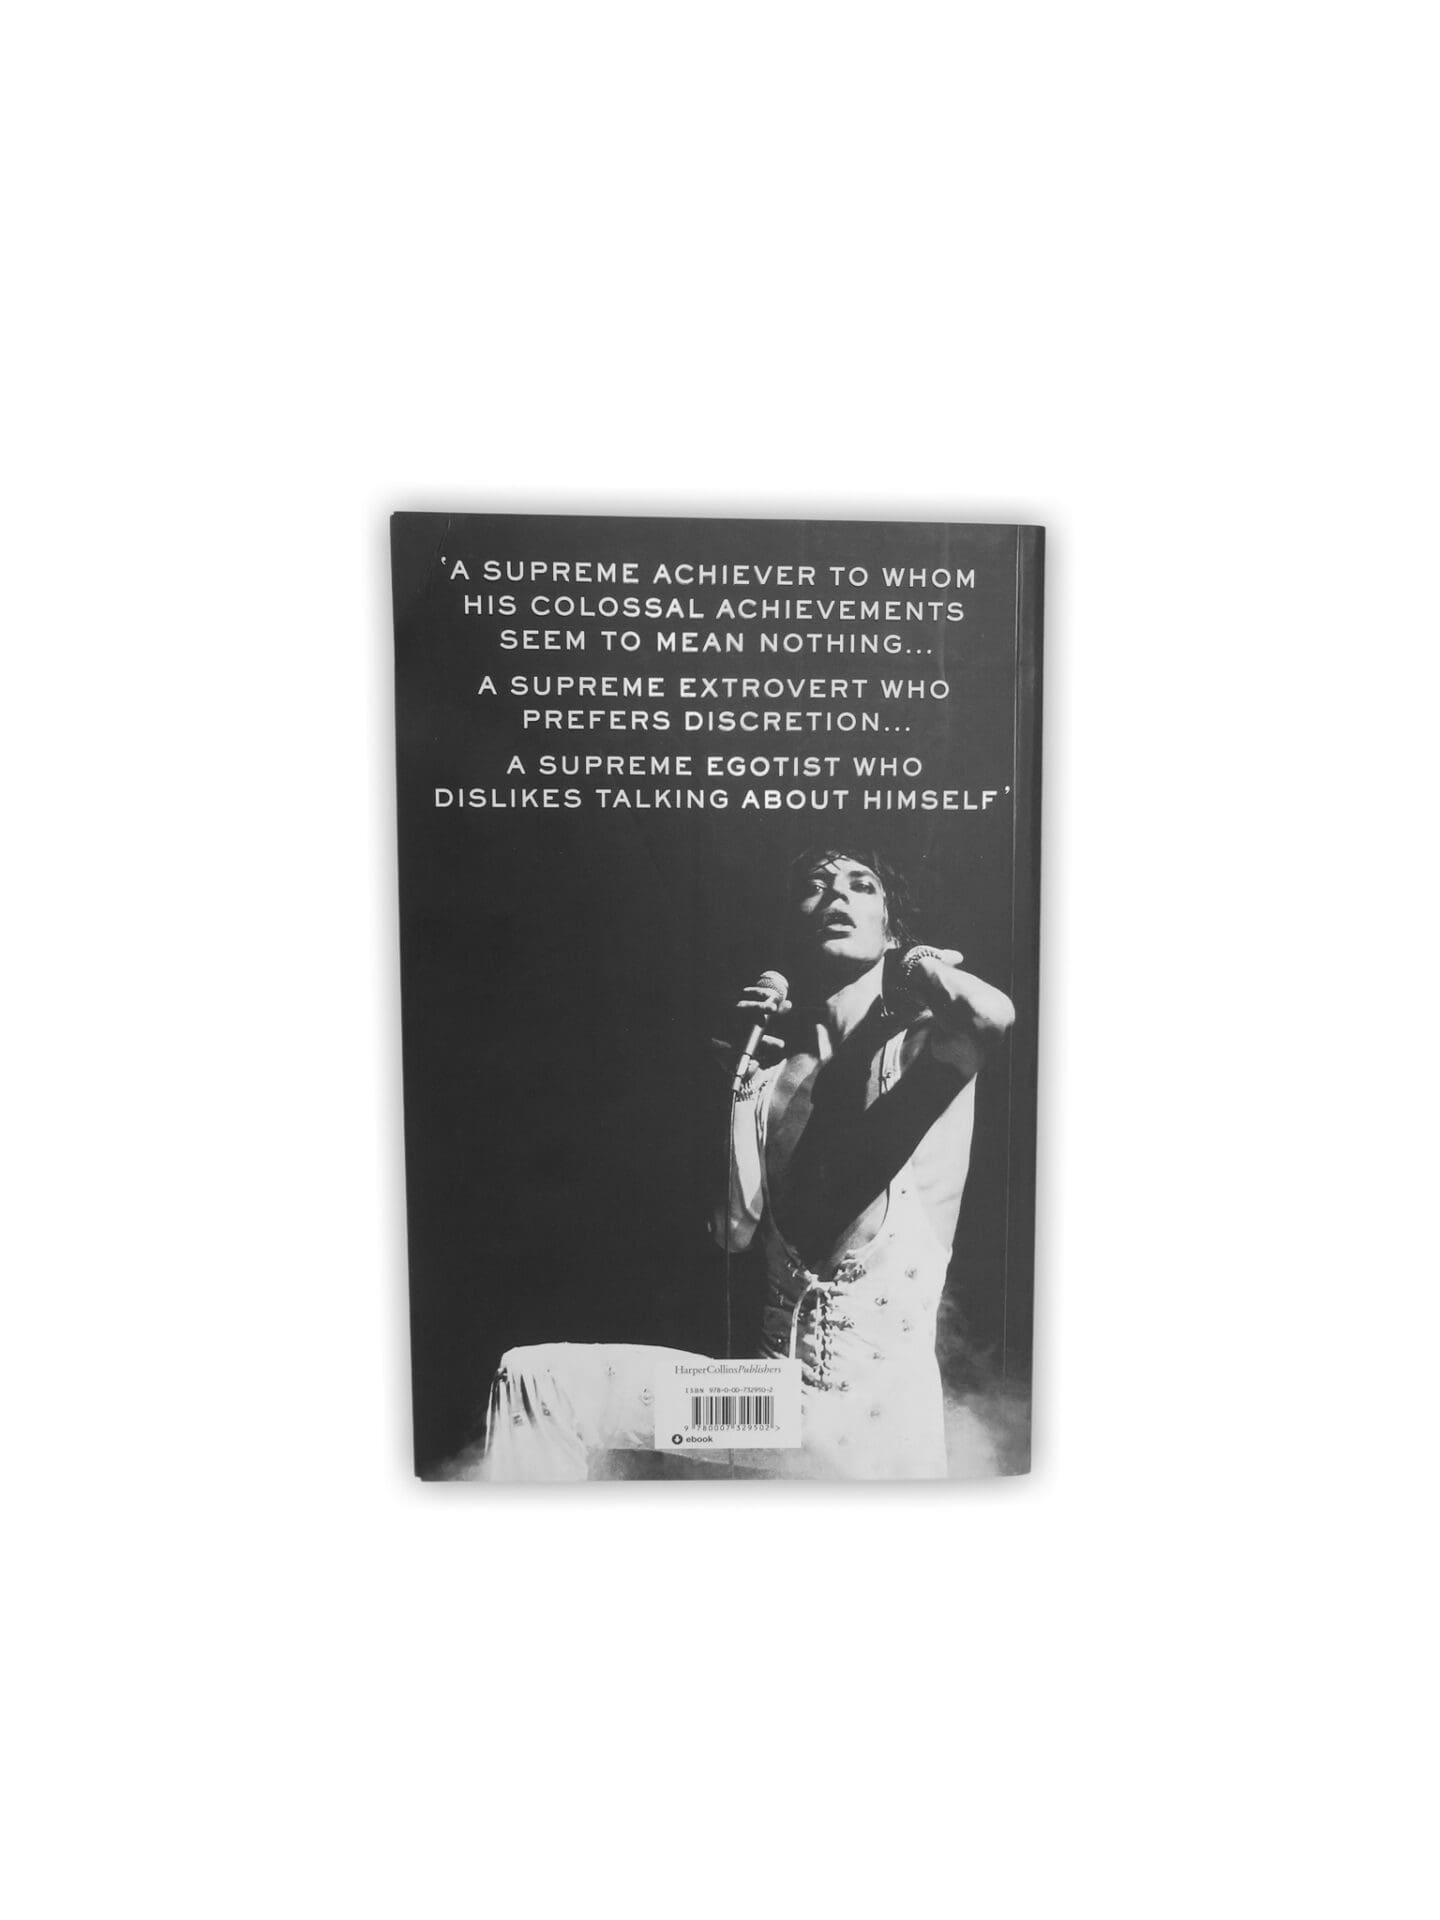 Biography of Mick Jagger.